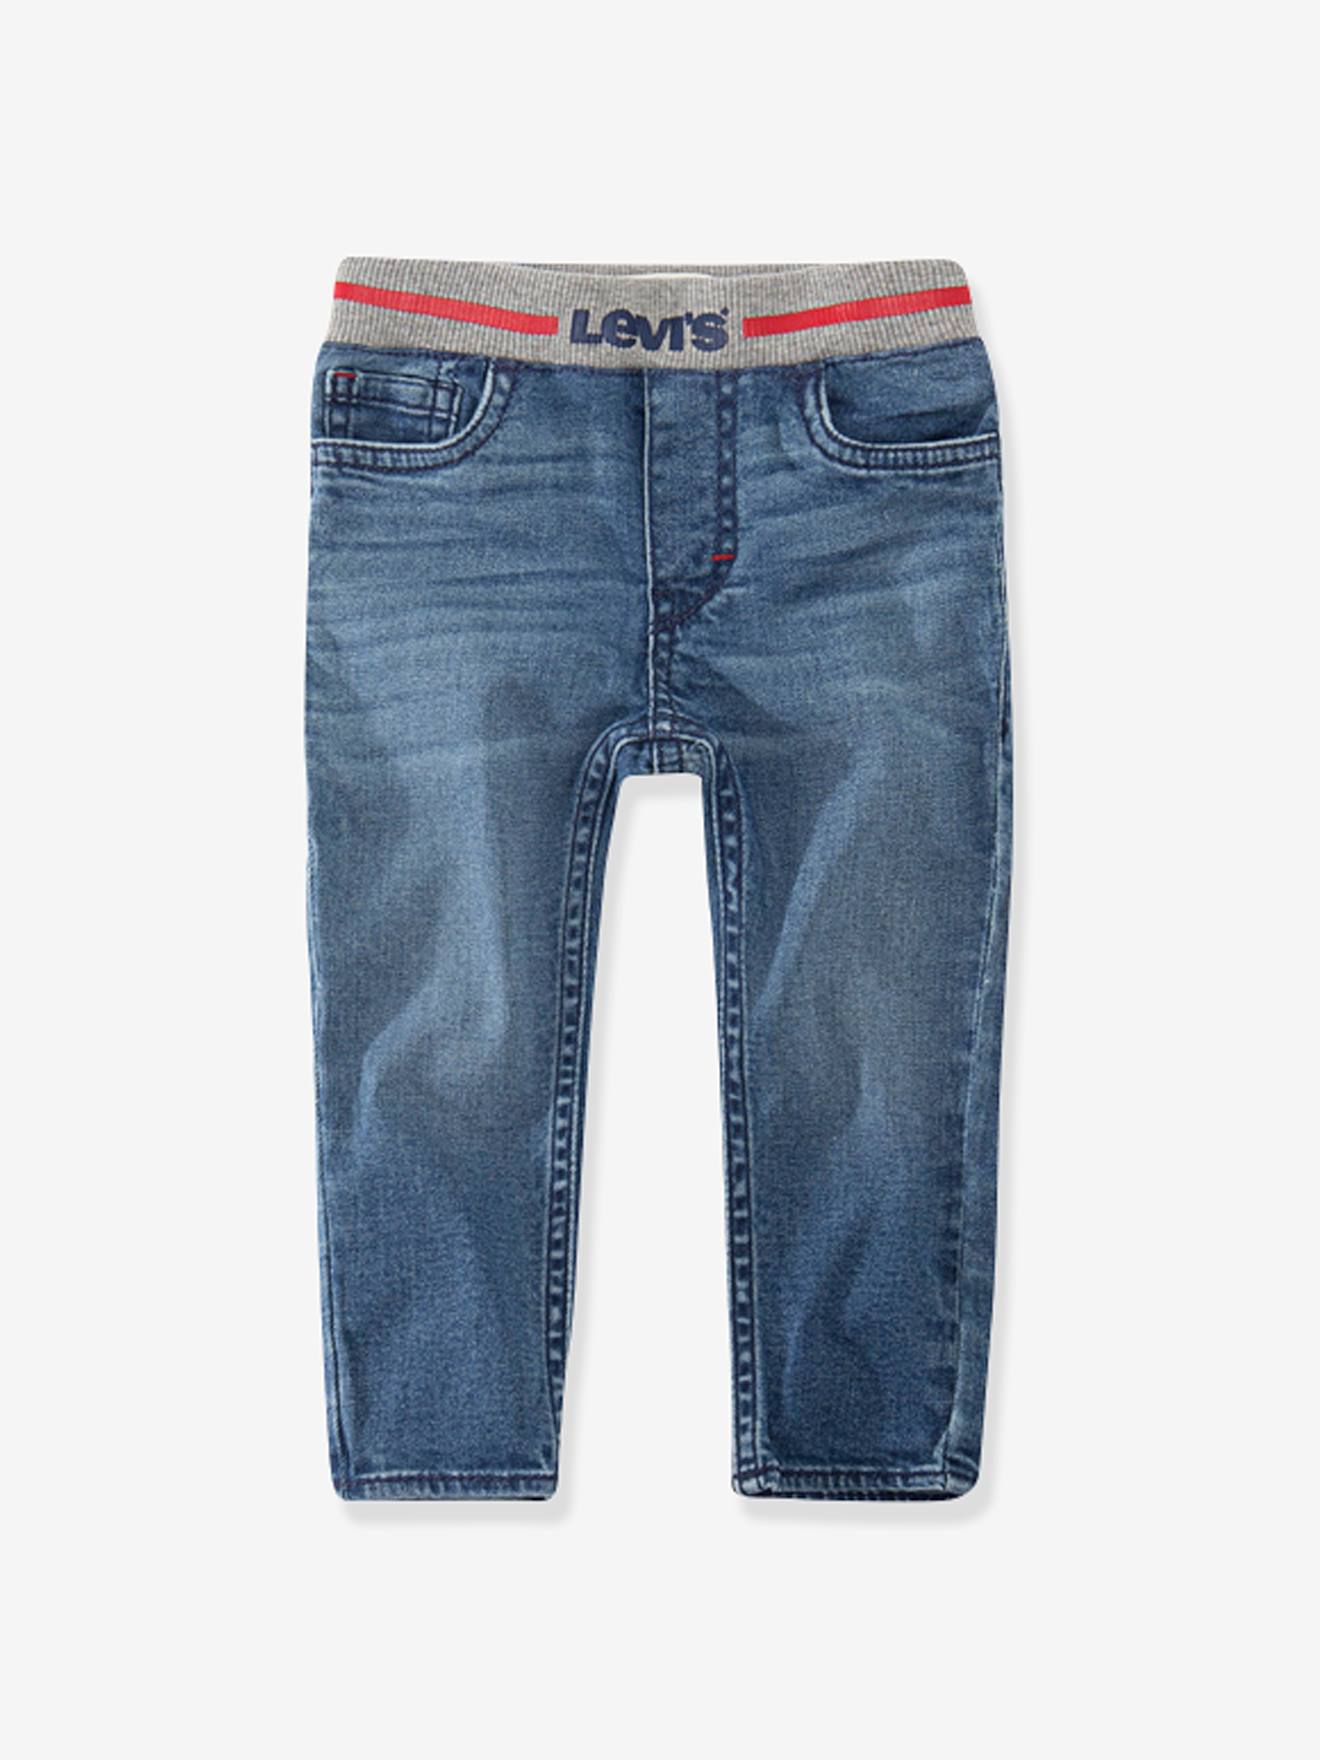 LVB Skinny Dobby Pull-On Jeans for Boys by Levi’s(r) blue